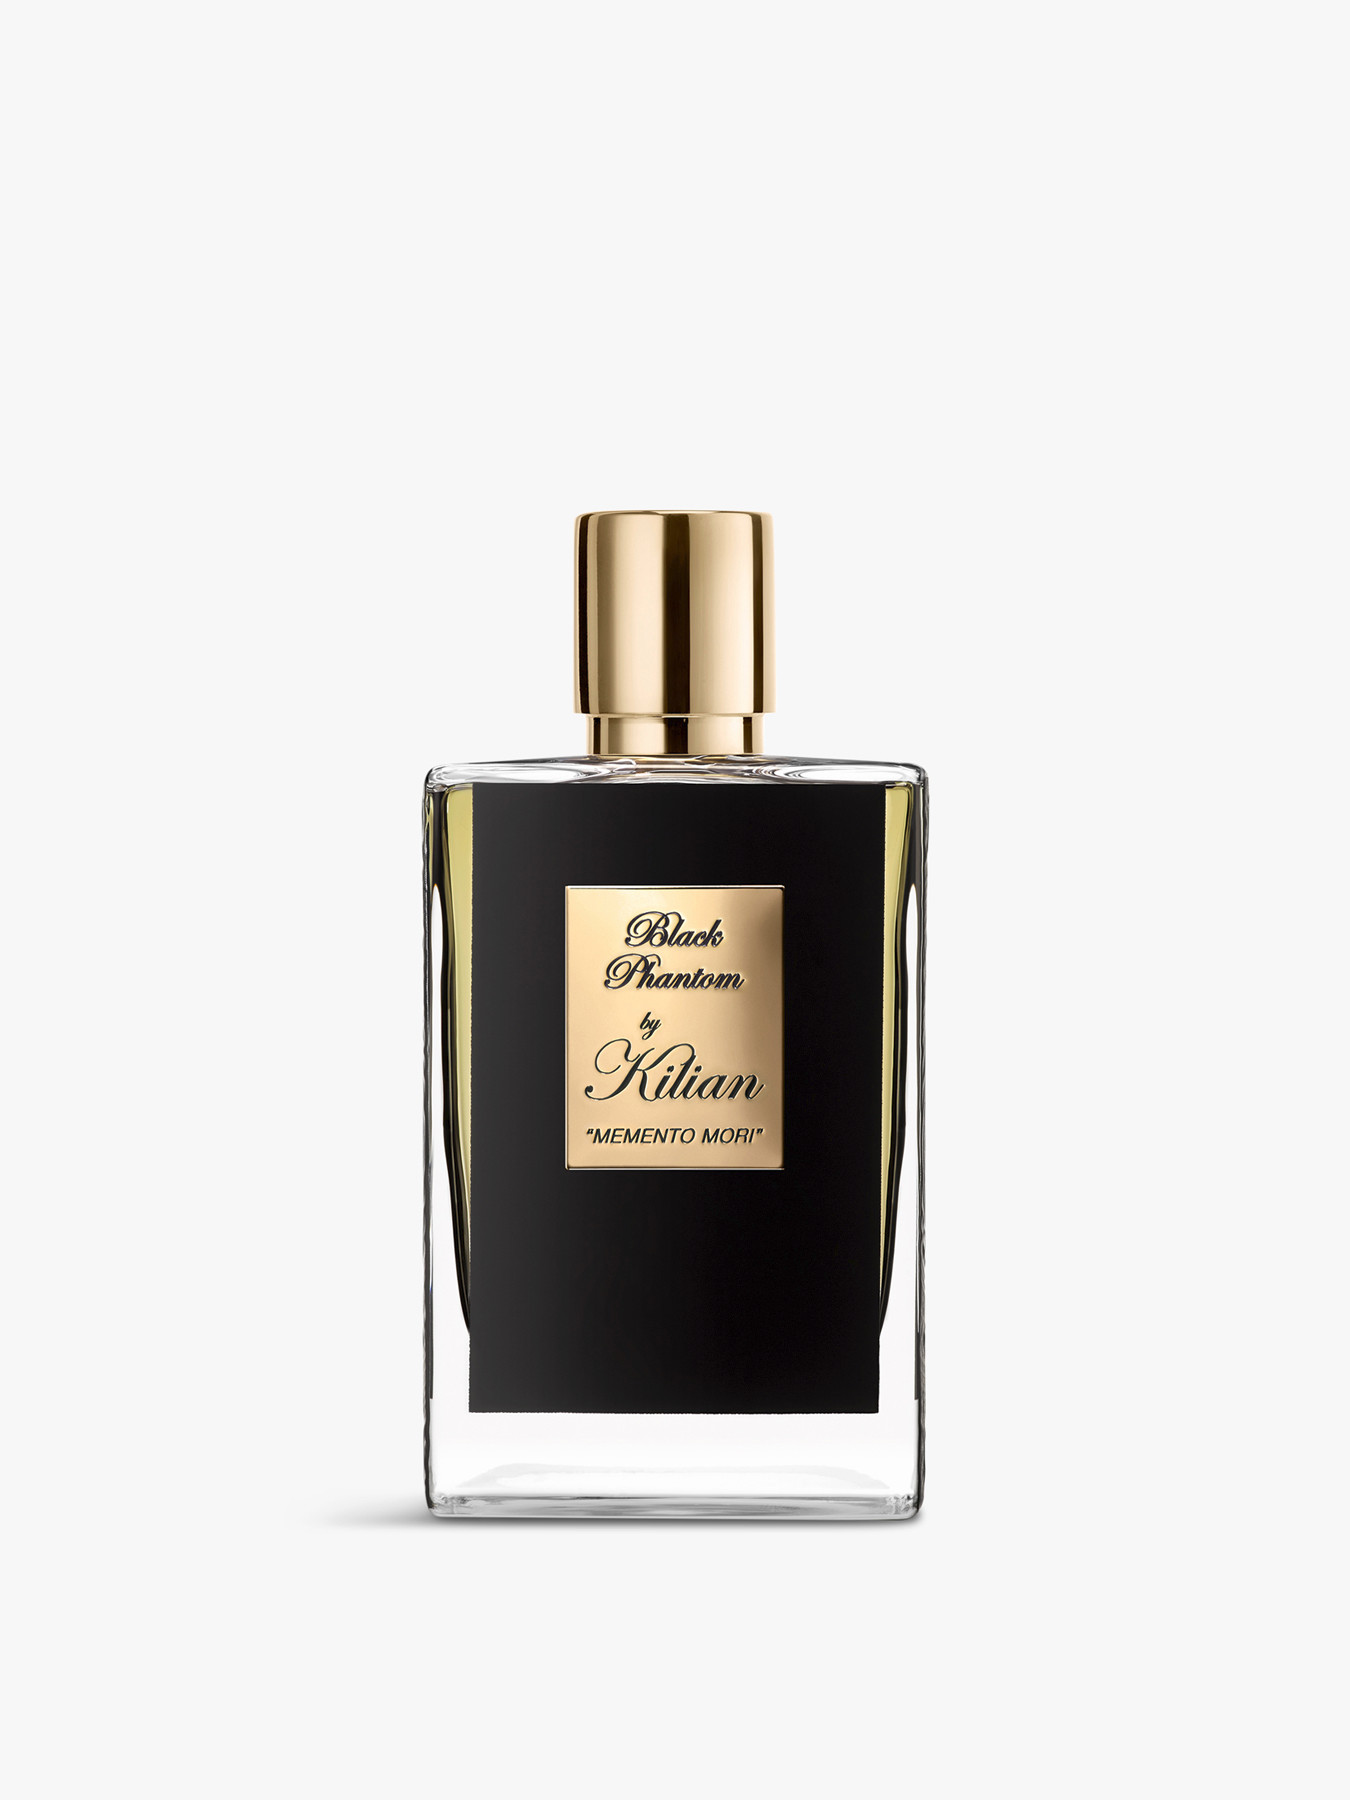 Kilian Paris Black Phantom Eau De Parfum Refillable Spray 50ml